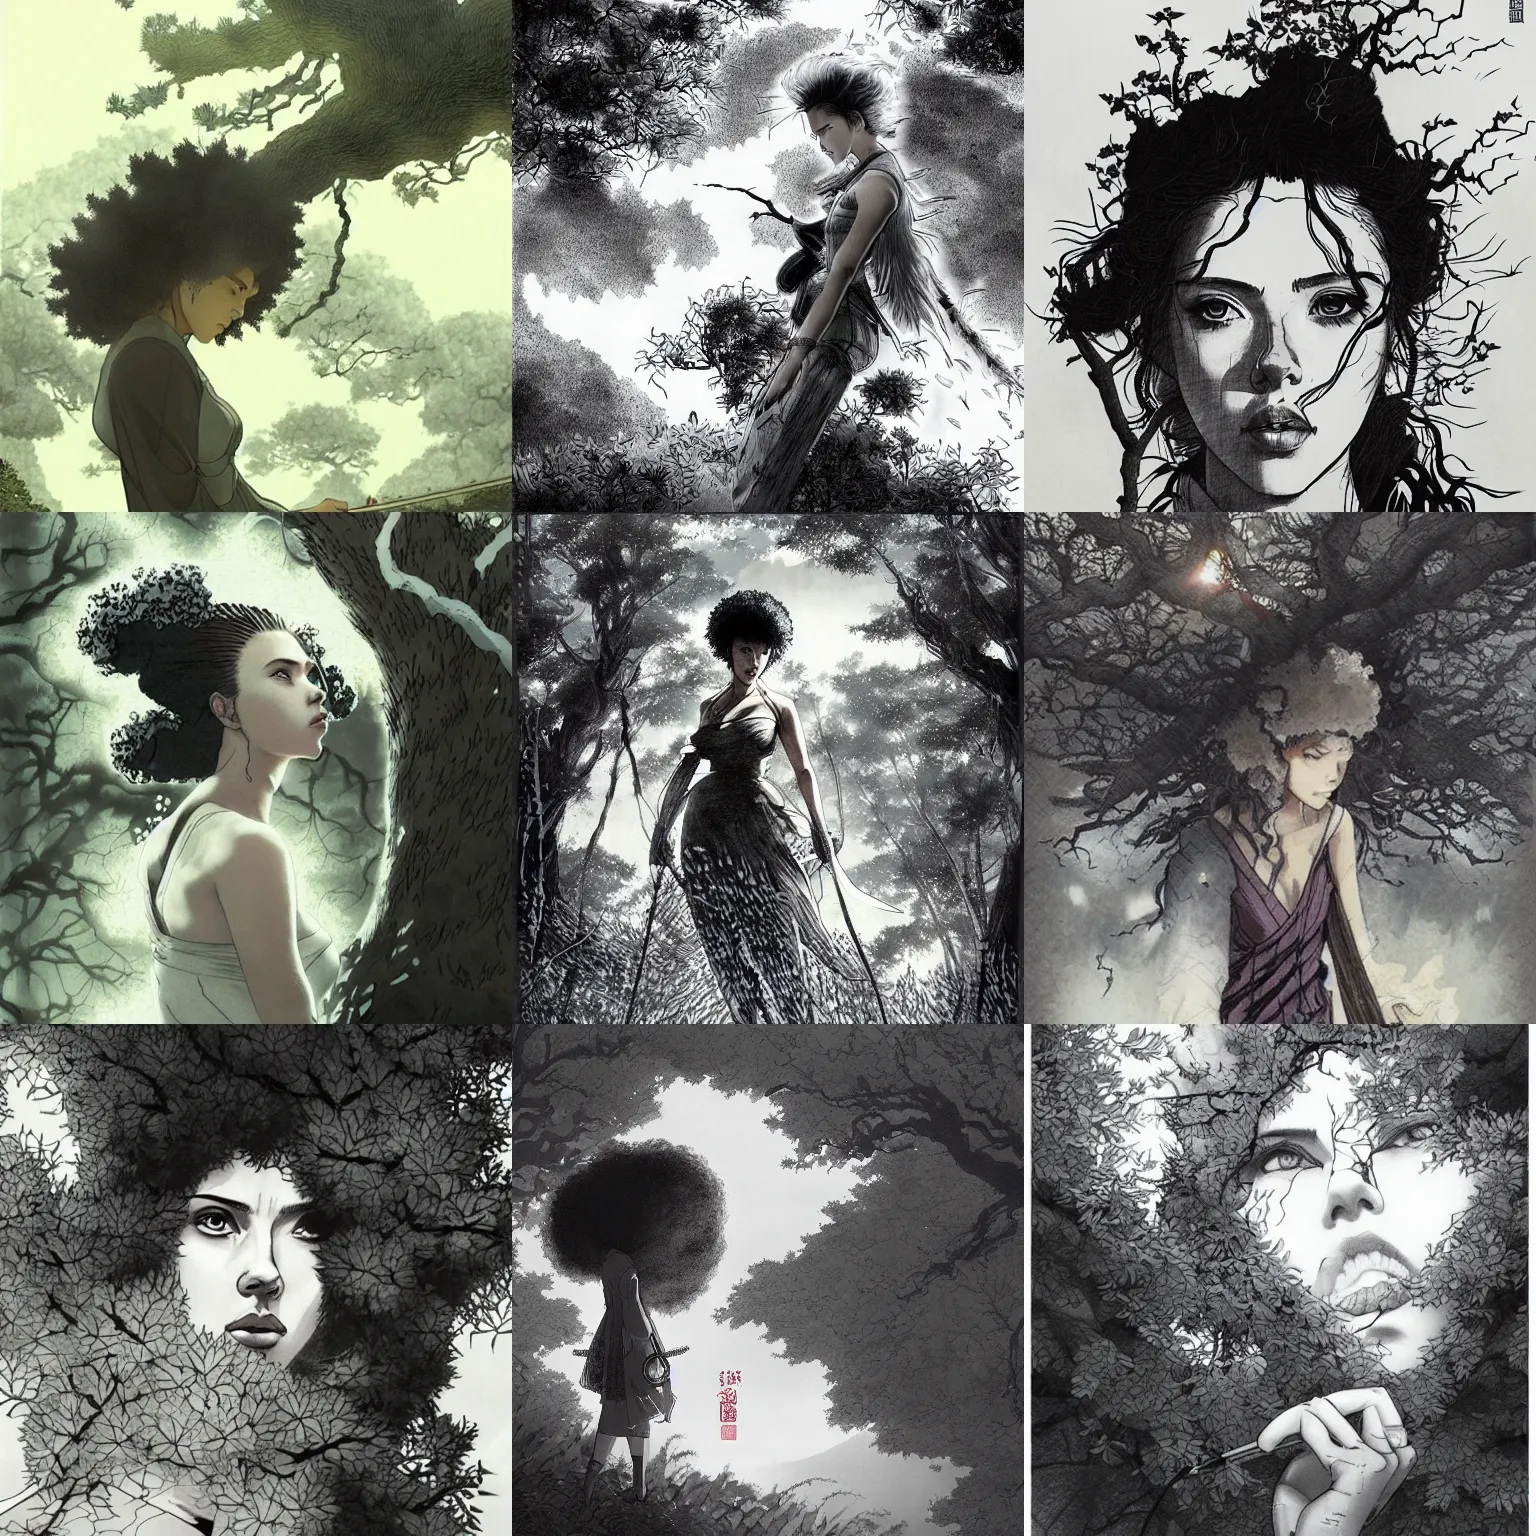 Prompt: scarlett johansson as afro samurai in beautiful japanese landscape scene, leaves blowing off trees, manga style, greg rutkowski, pencil and ink